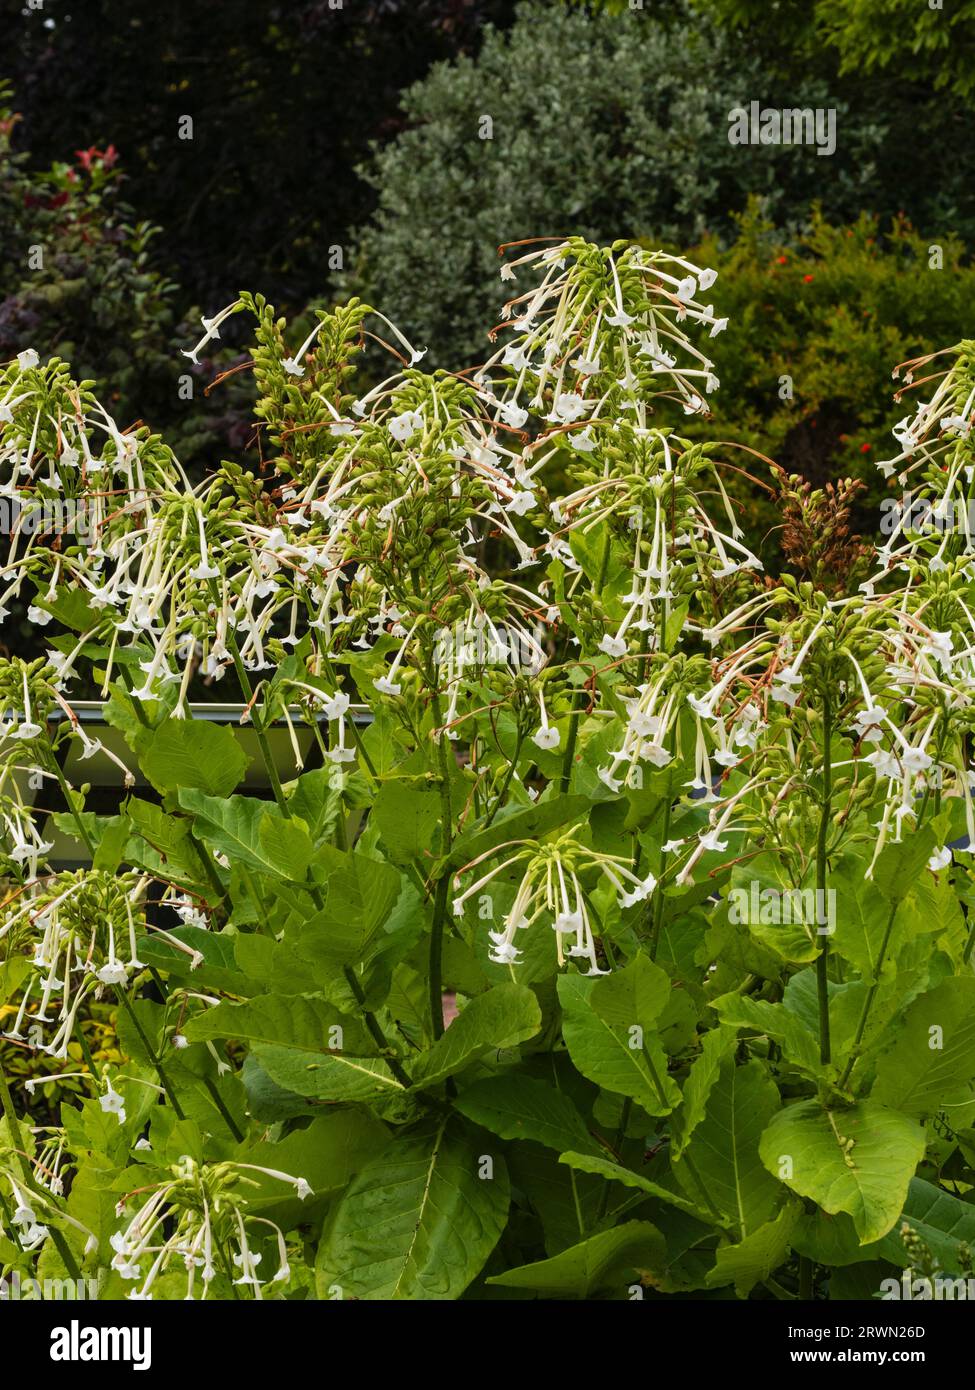 Tubular white fragrant flowers of the tender annual to biennial woodland tobacco plant, Nicotiana sylvestris, Stock Photo